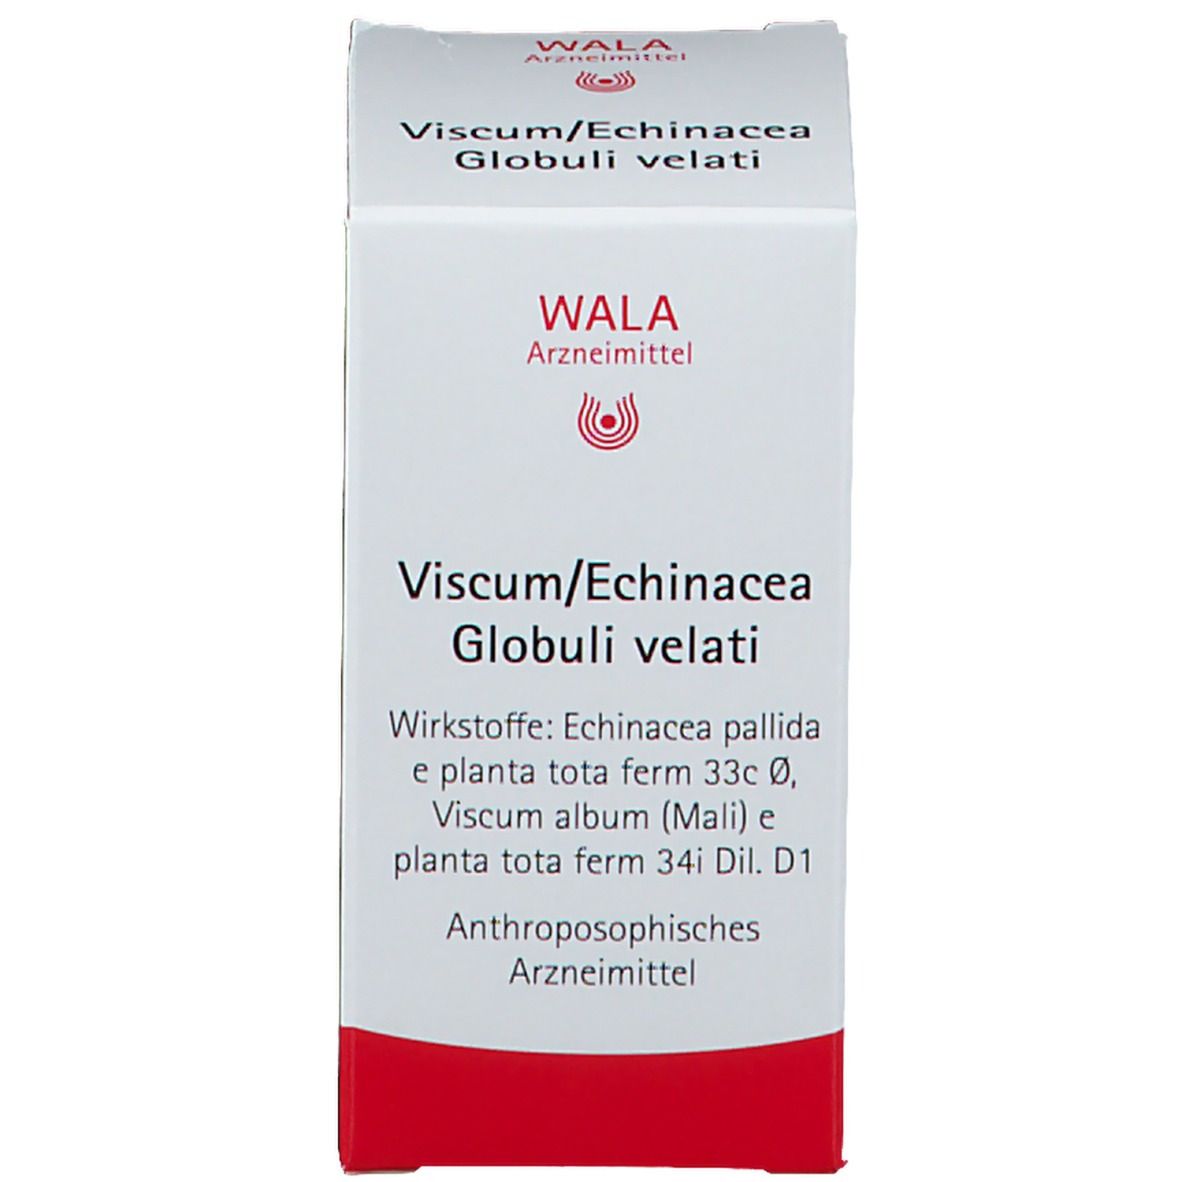 WALA® Viscum Echinacea Globuli